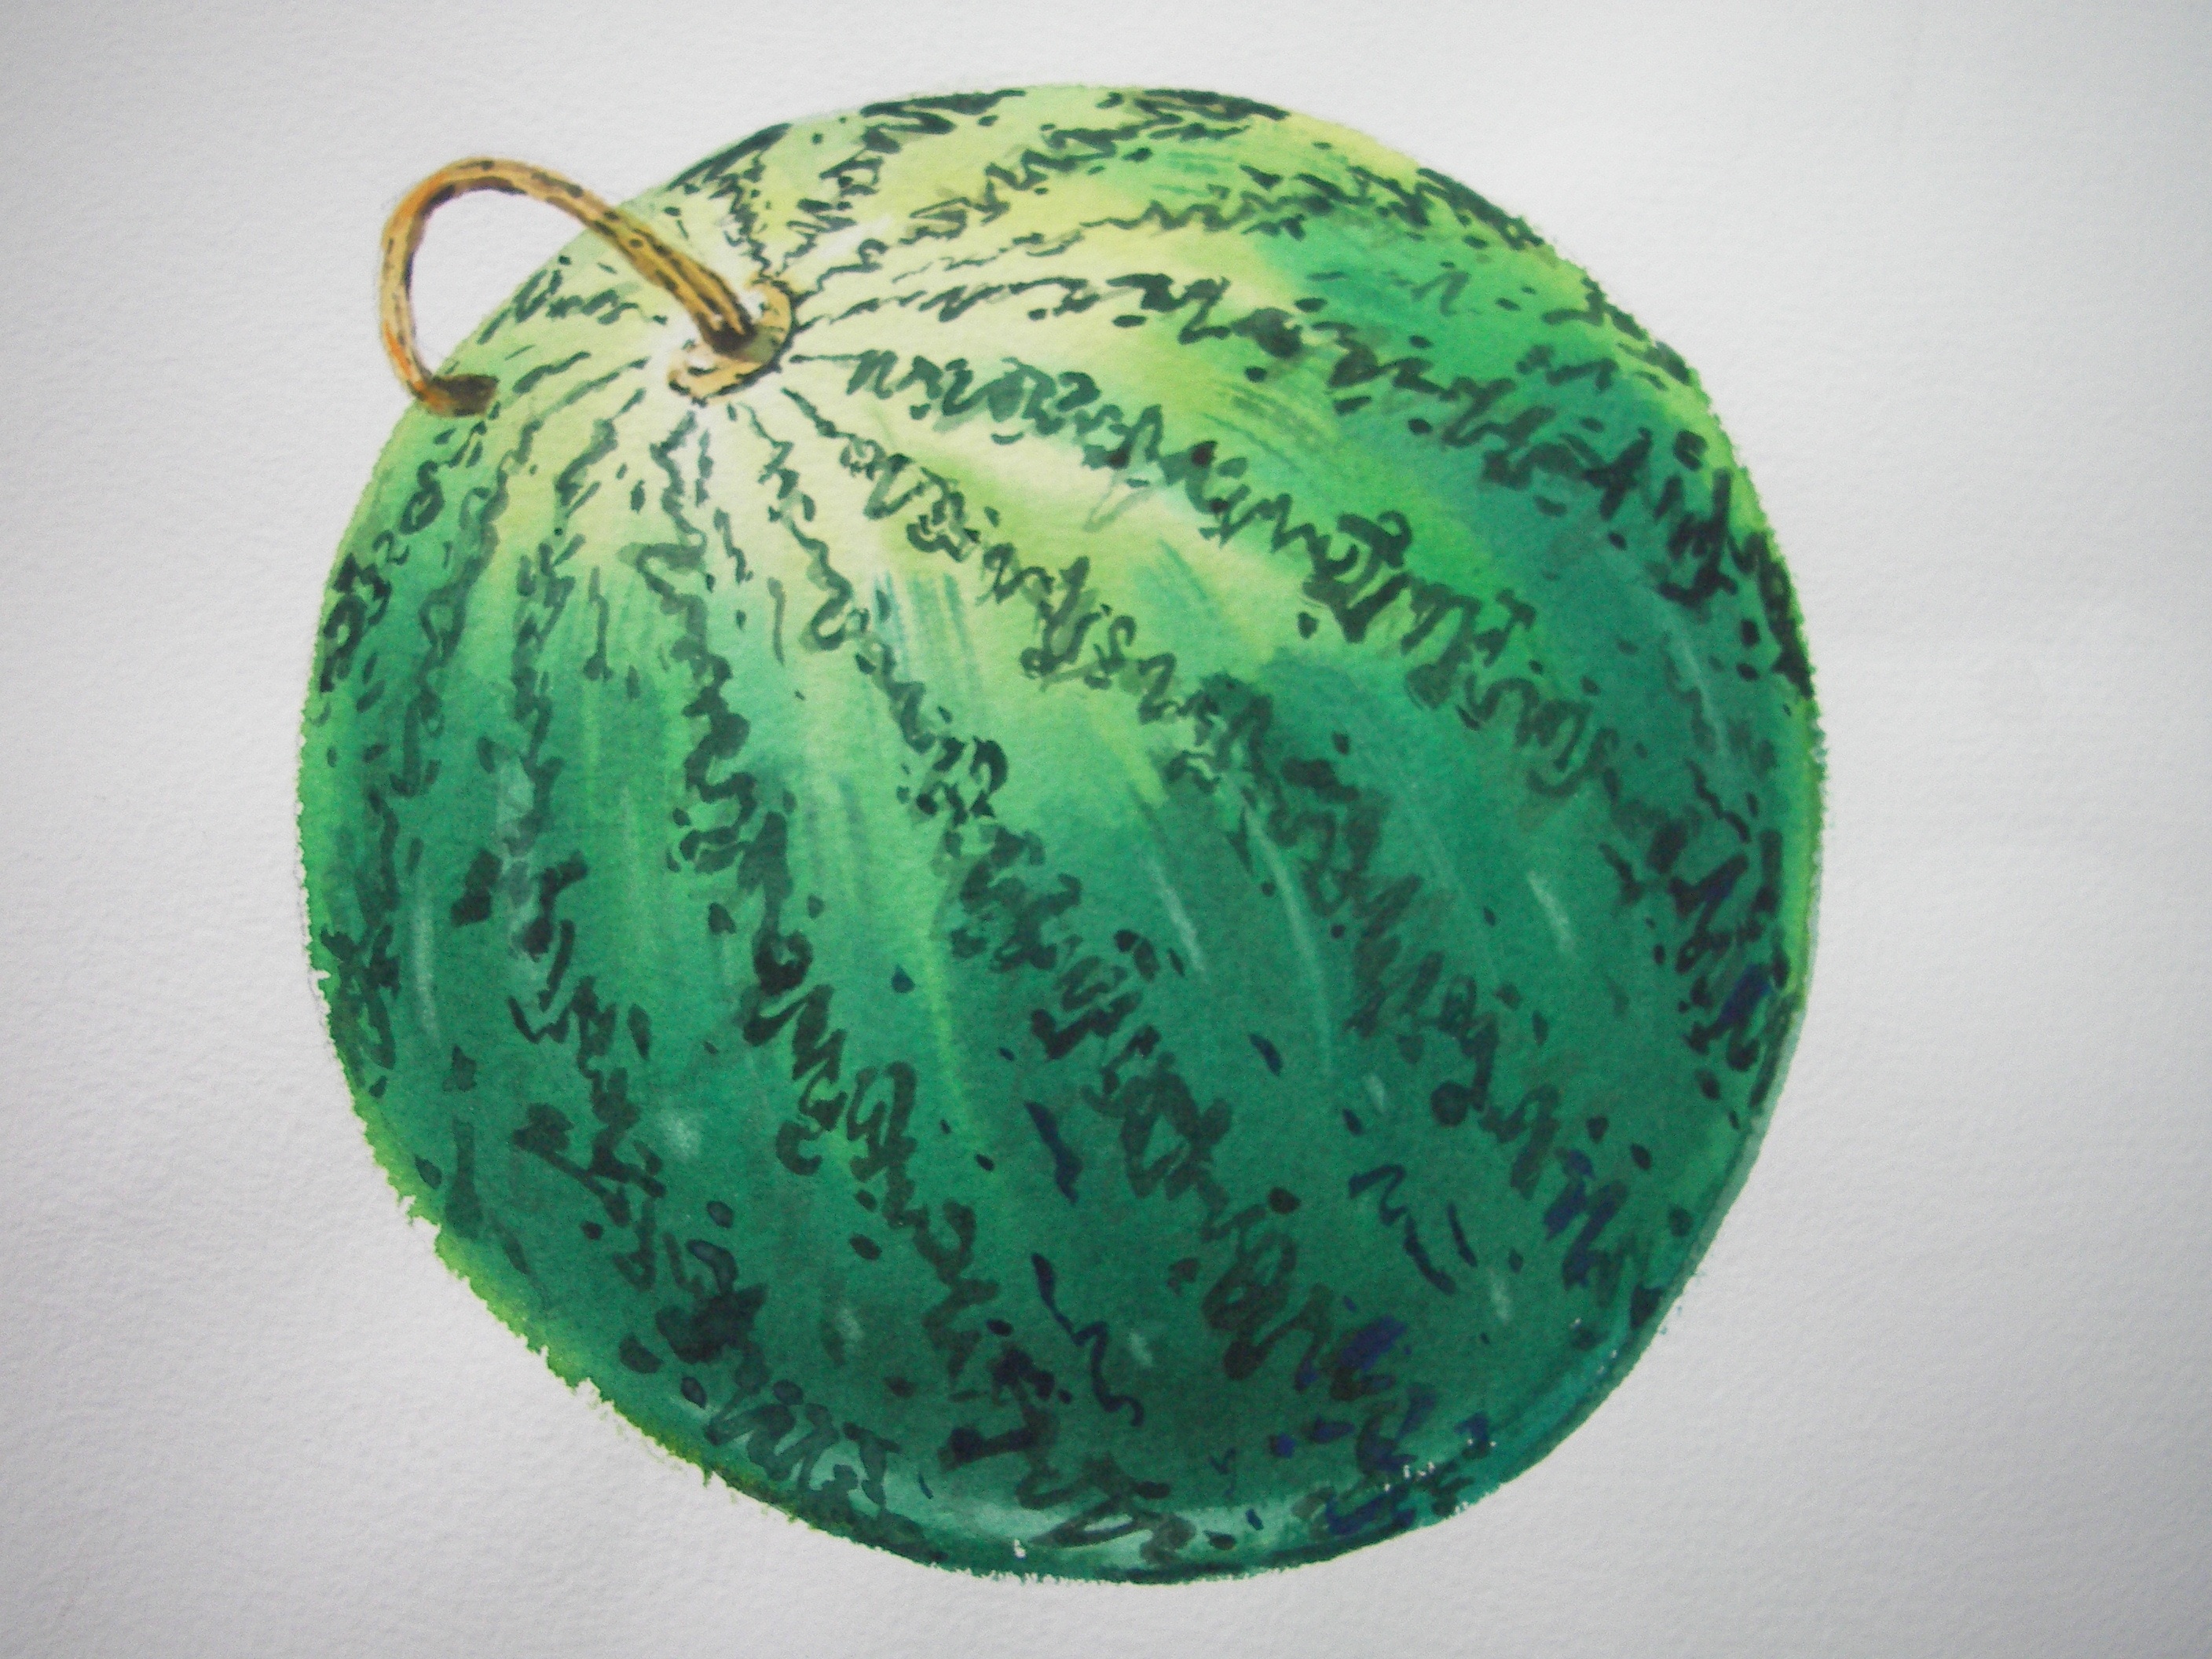 green watermelon